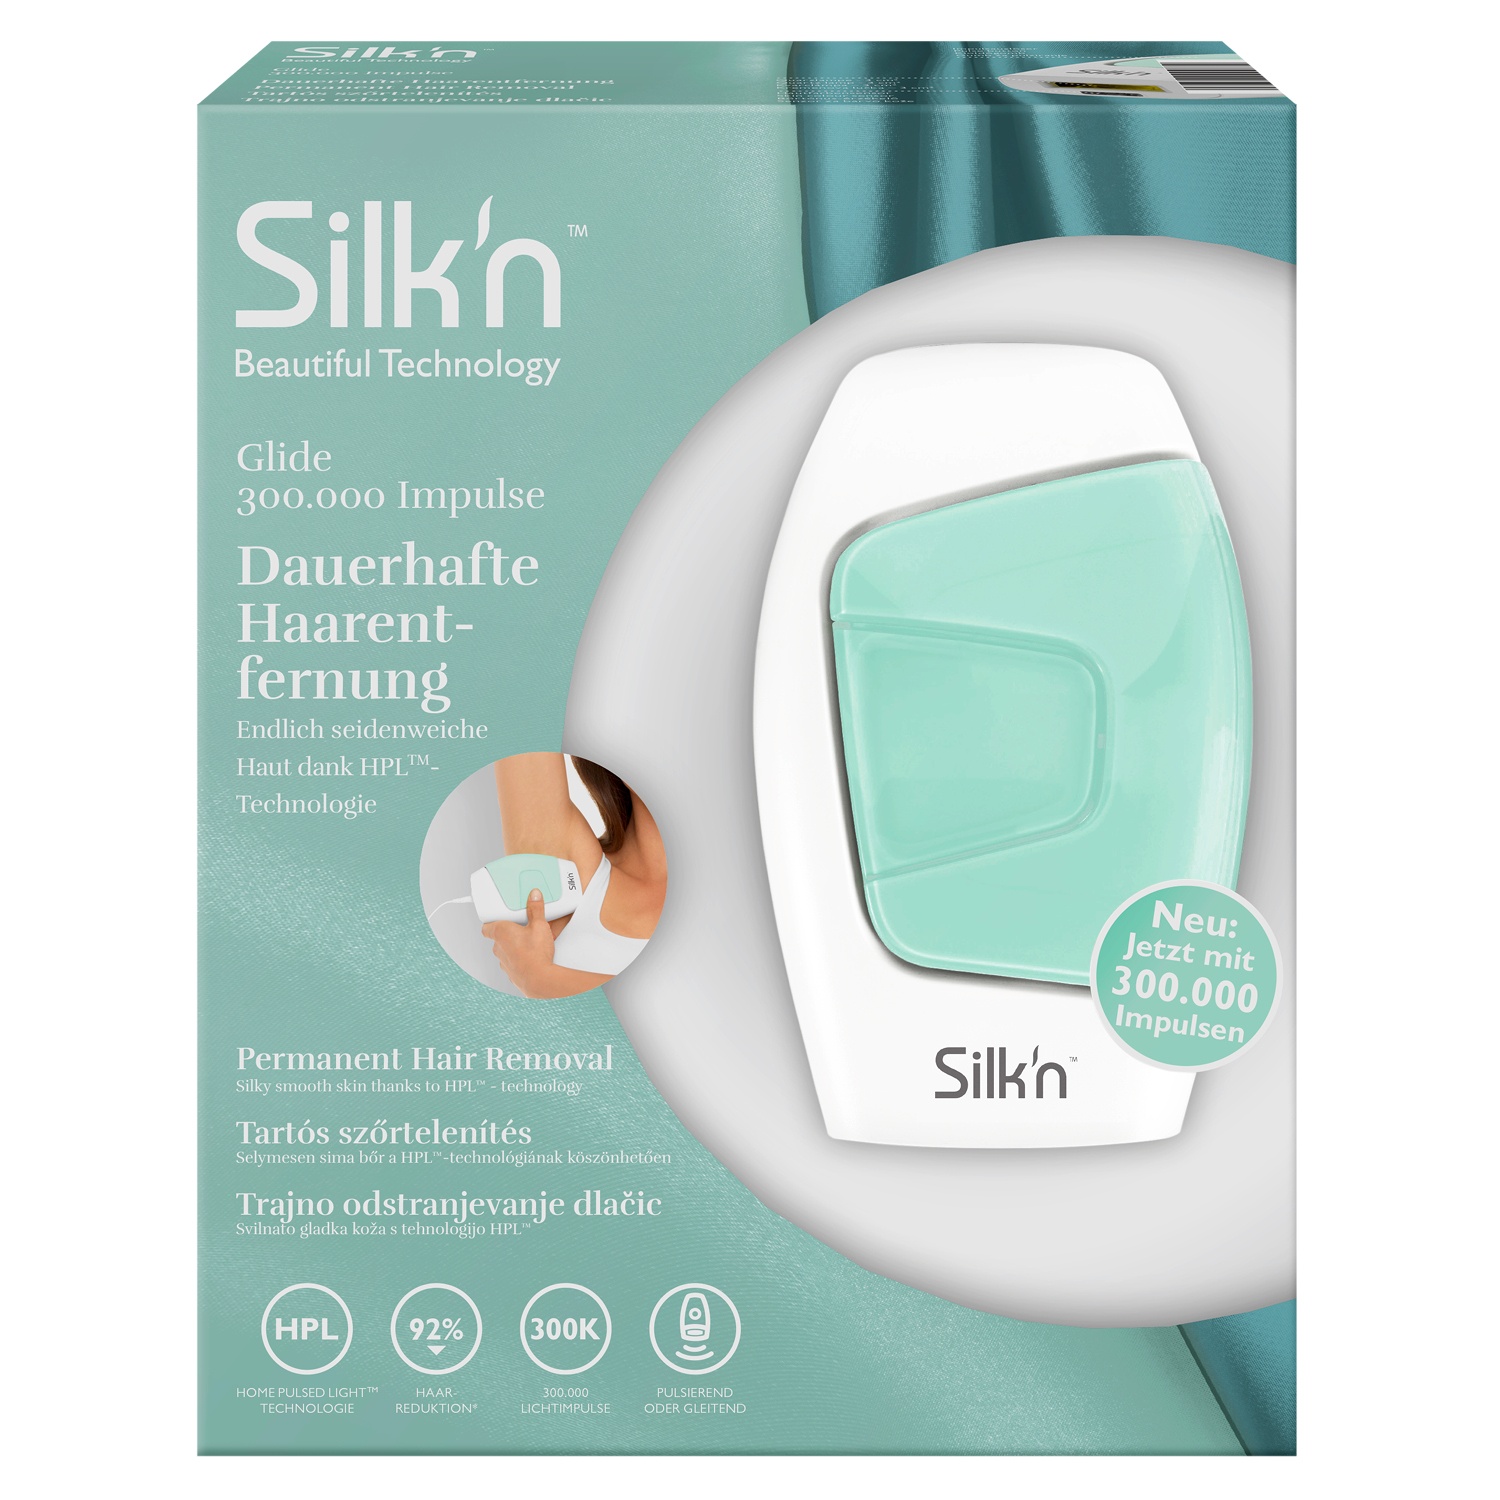 Silk'n® Haarentfernungsgerät Glide 300.000 Impulse